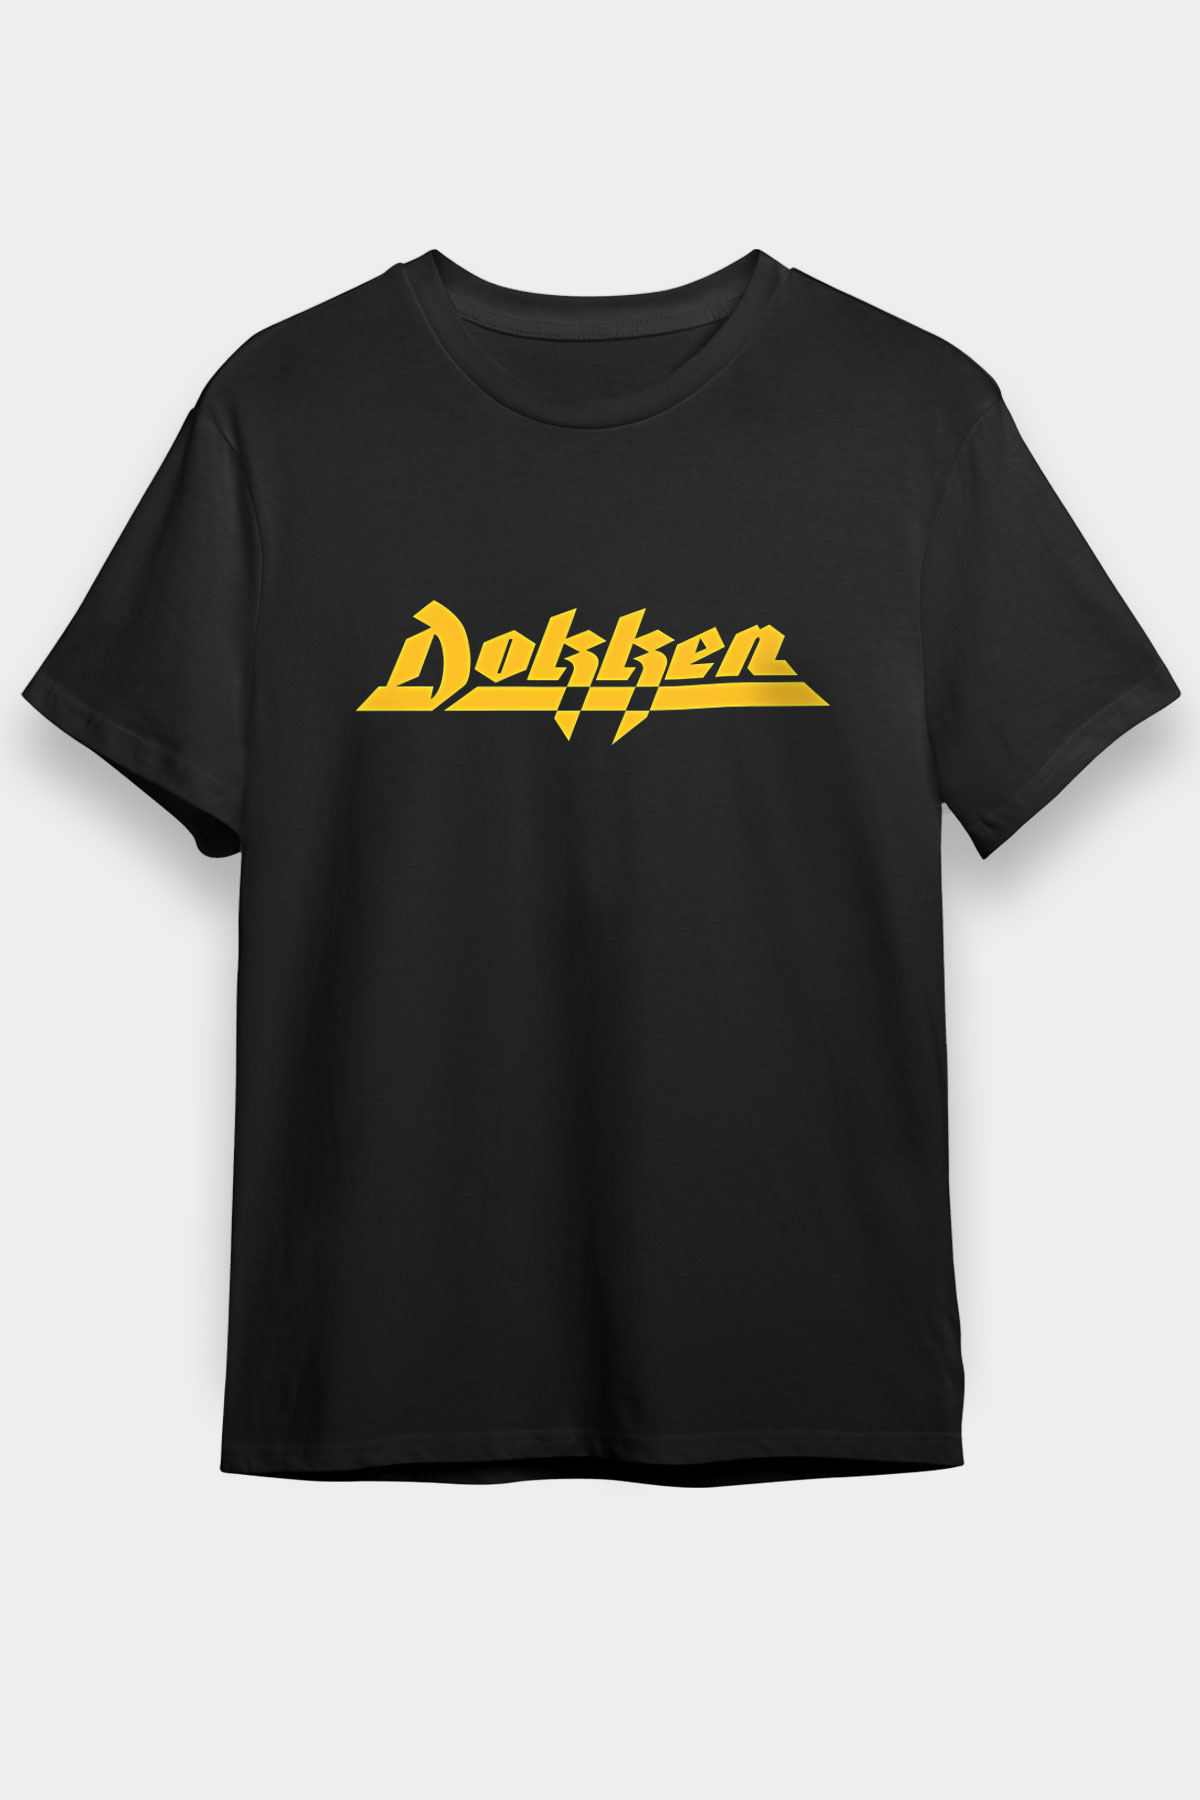 Dokken  T shirt,Music Band,Unisex Tshirt 18